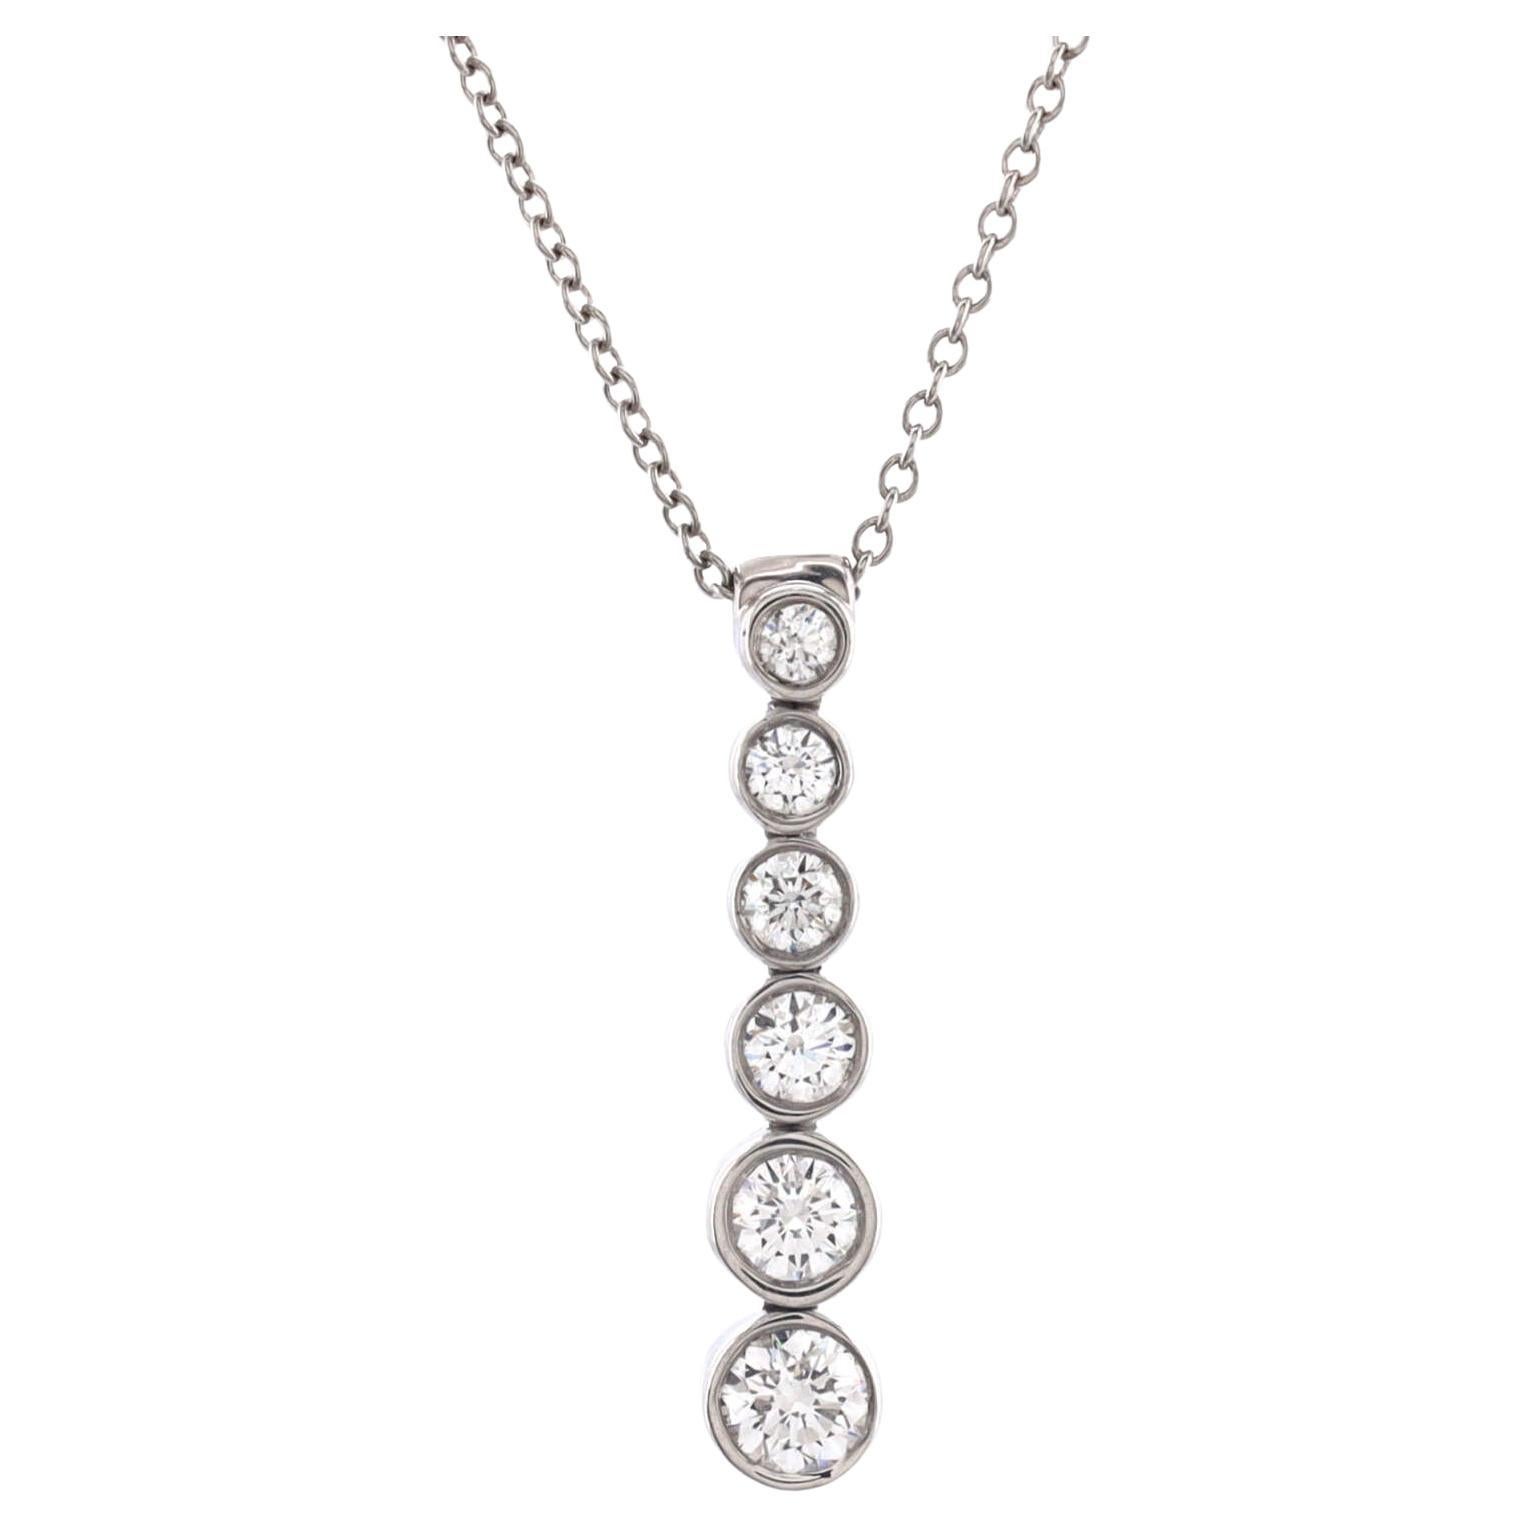 Tiffany & Co. Jazz Graduated Drop Pendant Necklace Platinum and Diamonds